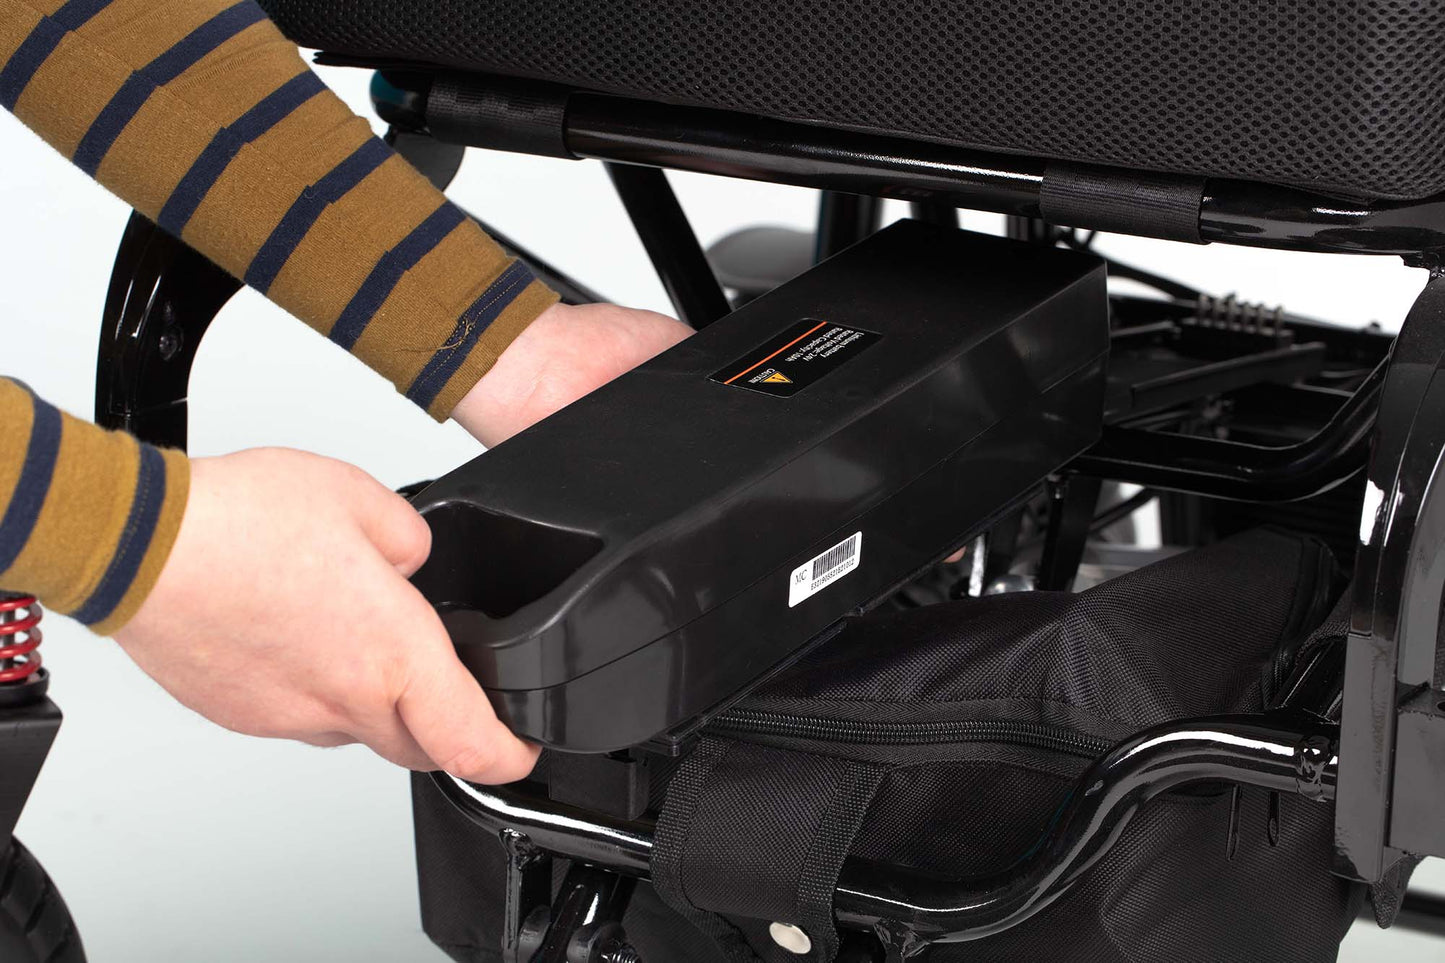 Drive AutoFold Powerchair Adult Wheelchair – Adjustable & Comfortable